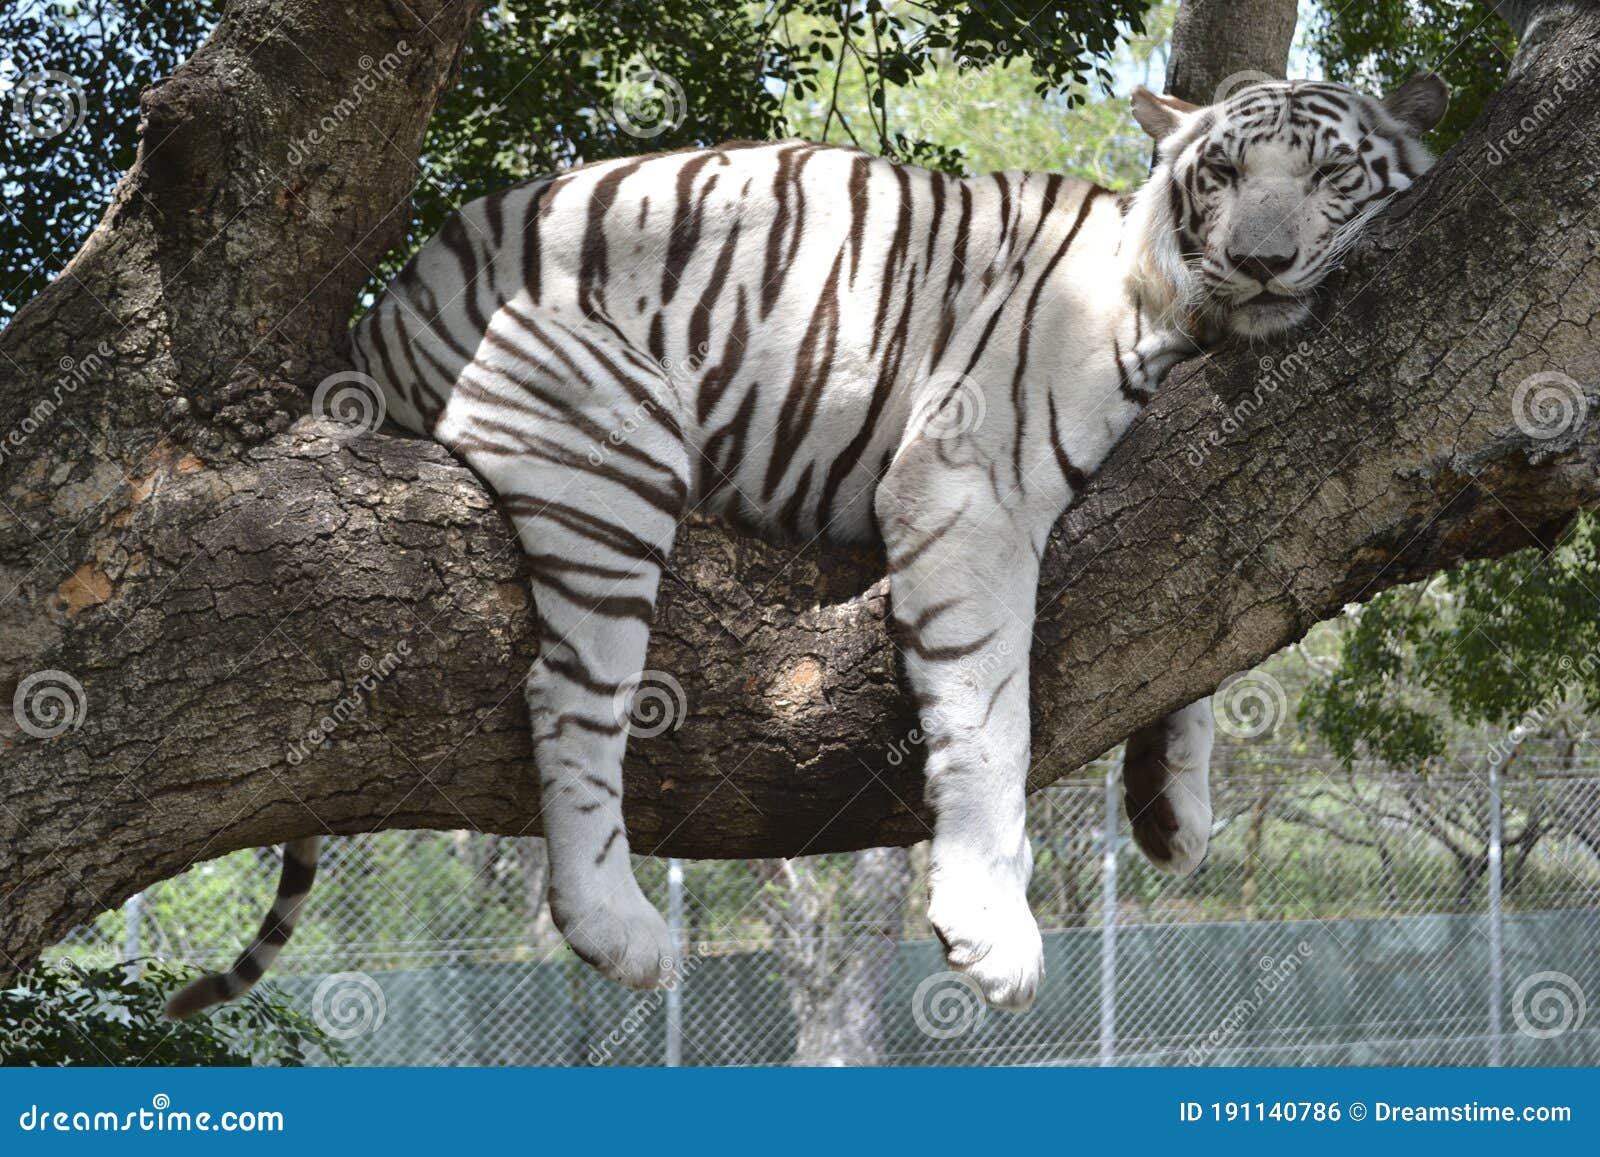 Animals. Tigers. Mauritius Island. Zoo Editorial Photo - Image of island,  cruise: 191140786